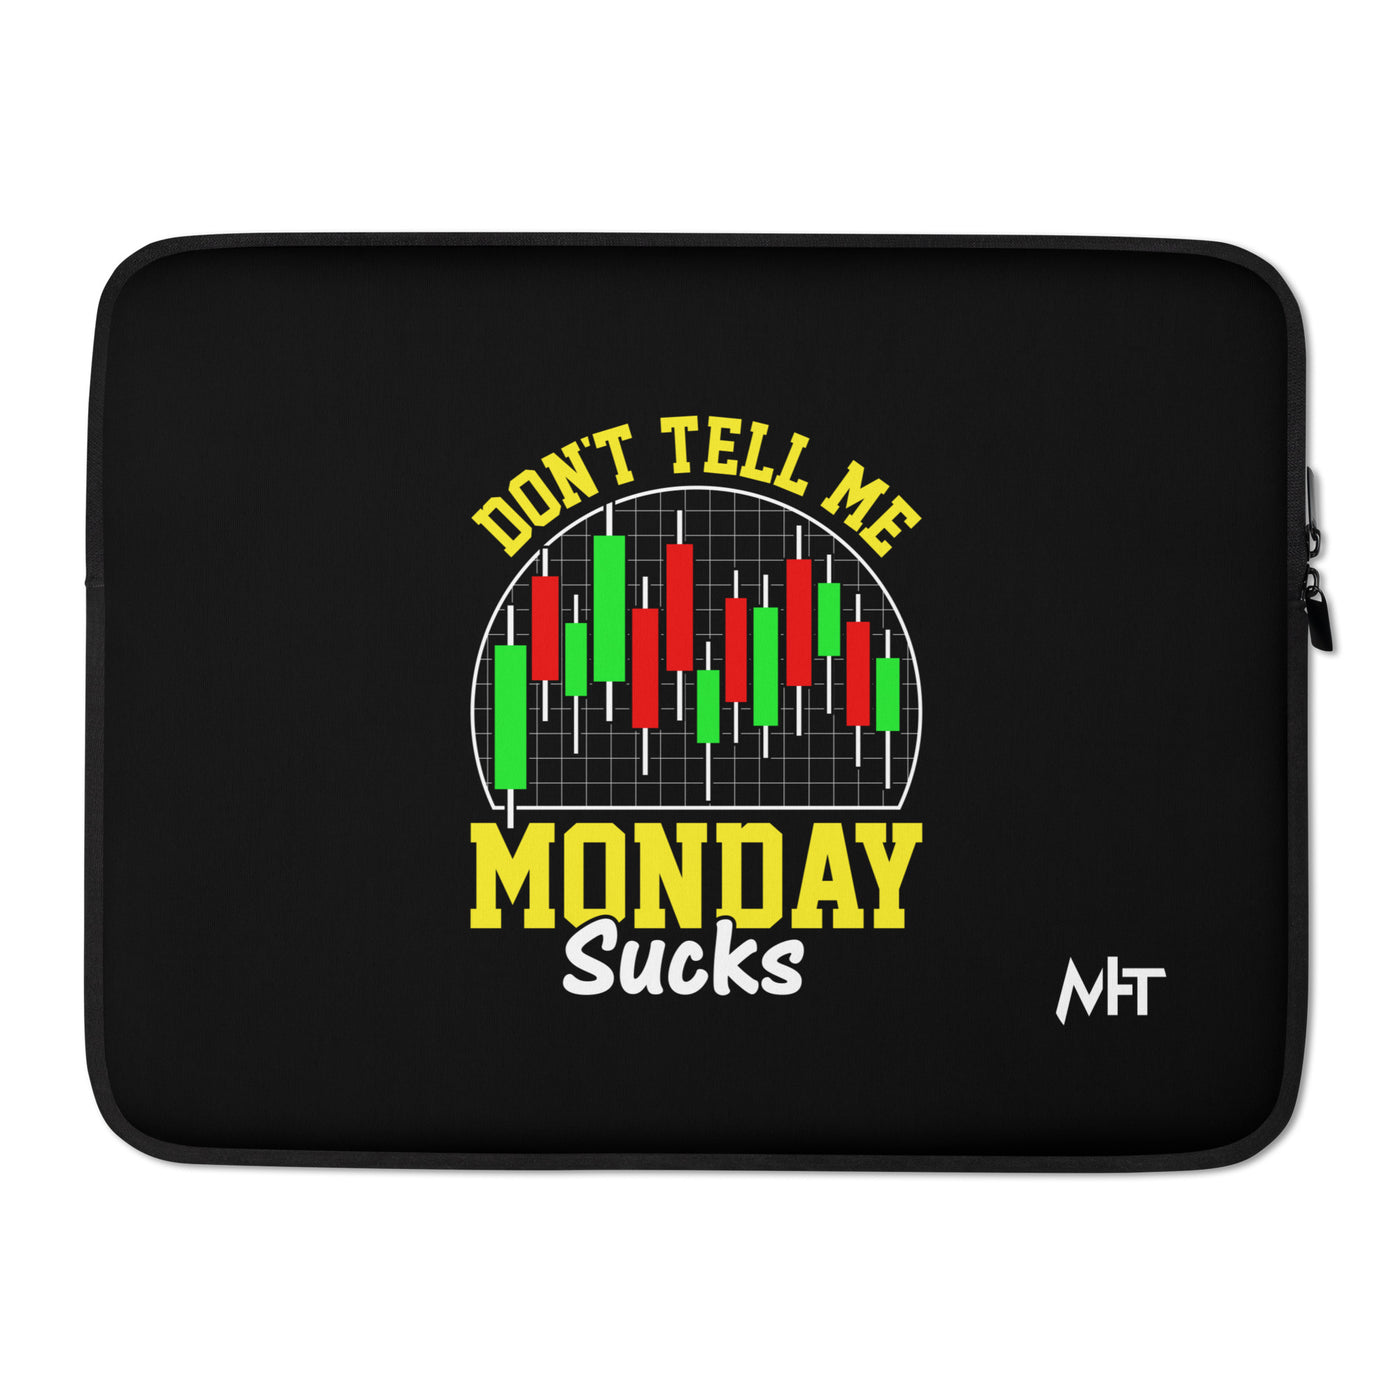 Don't Tell me Monday Sucks - Laptop Sleeve